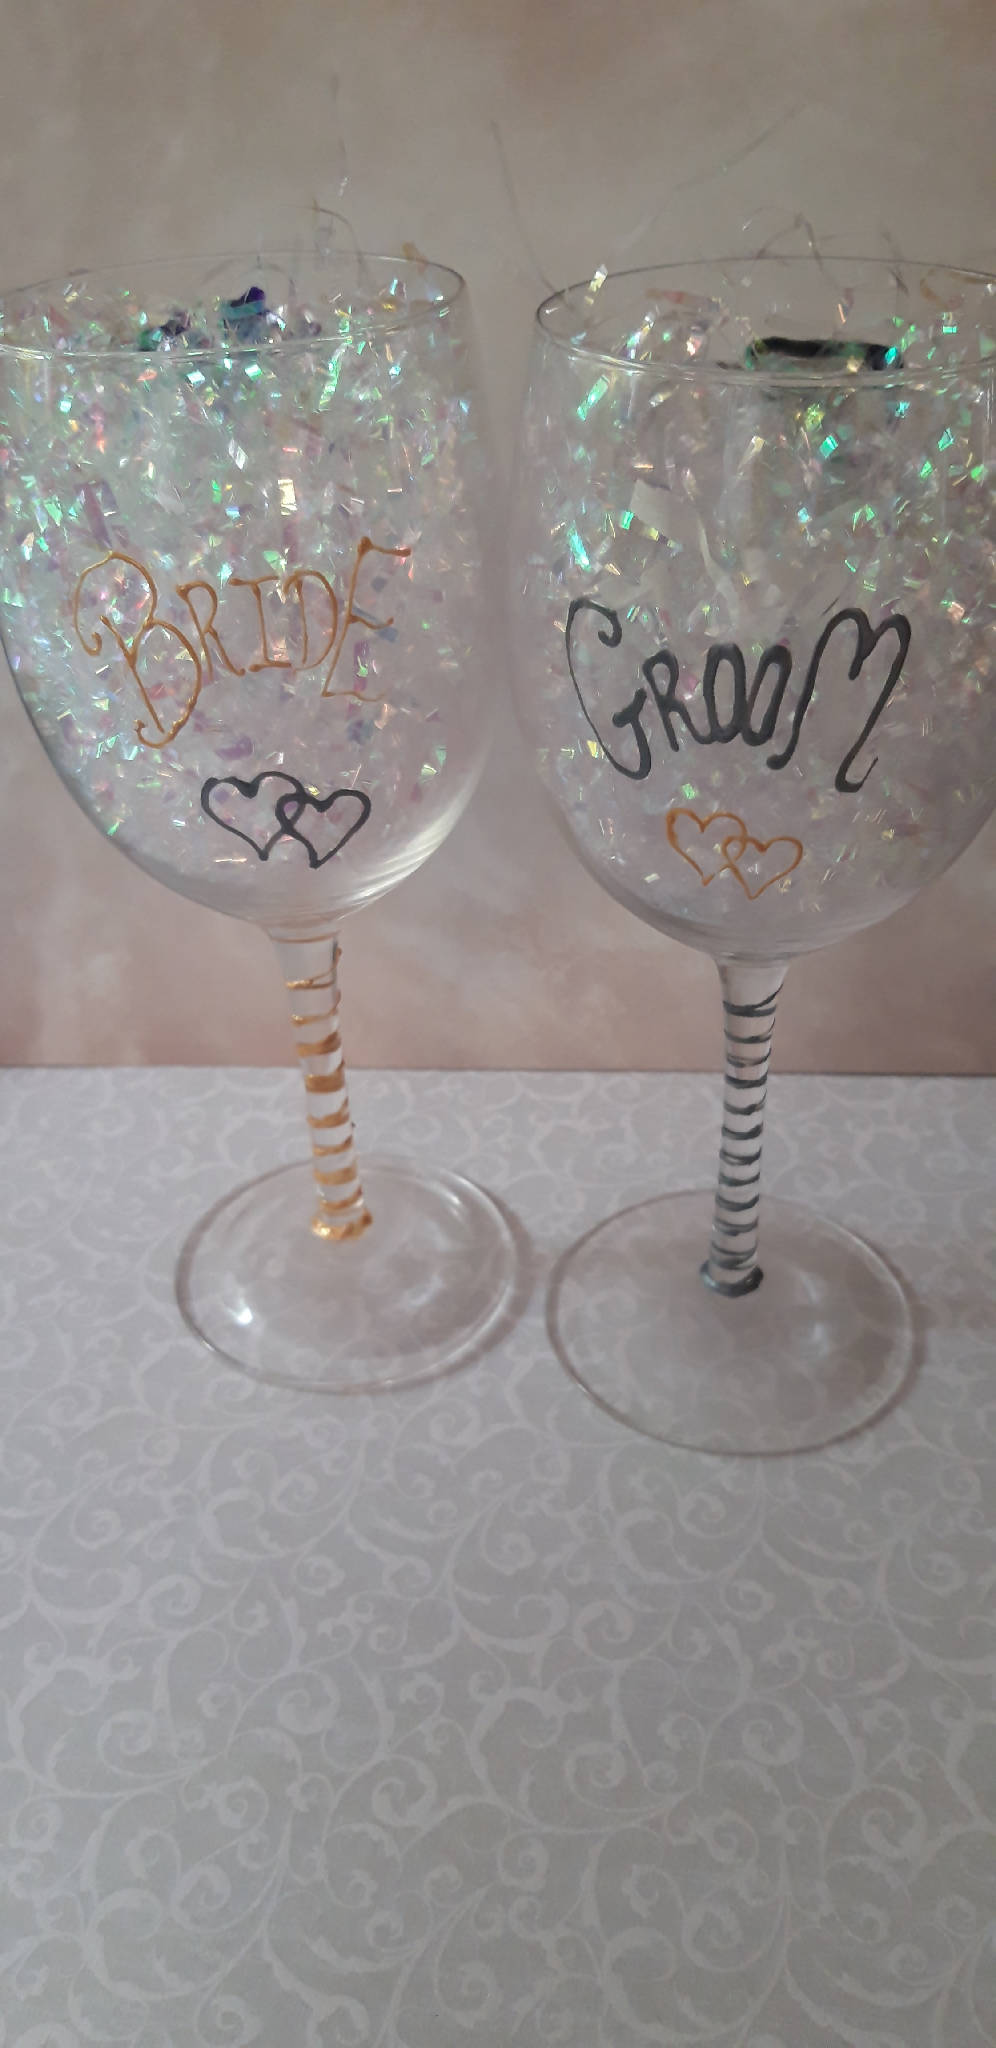 Handpainted wedding glasses